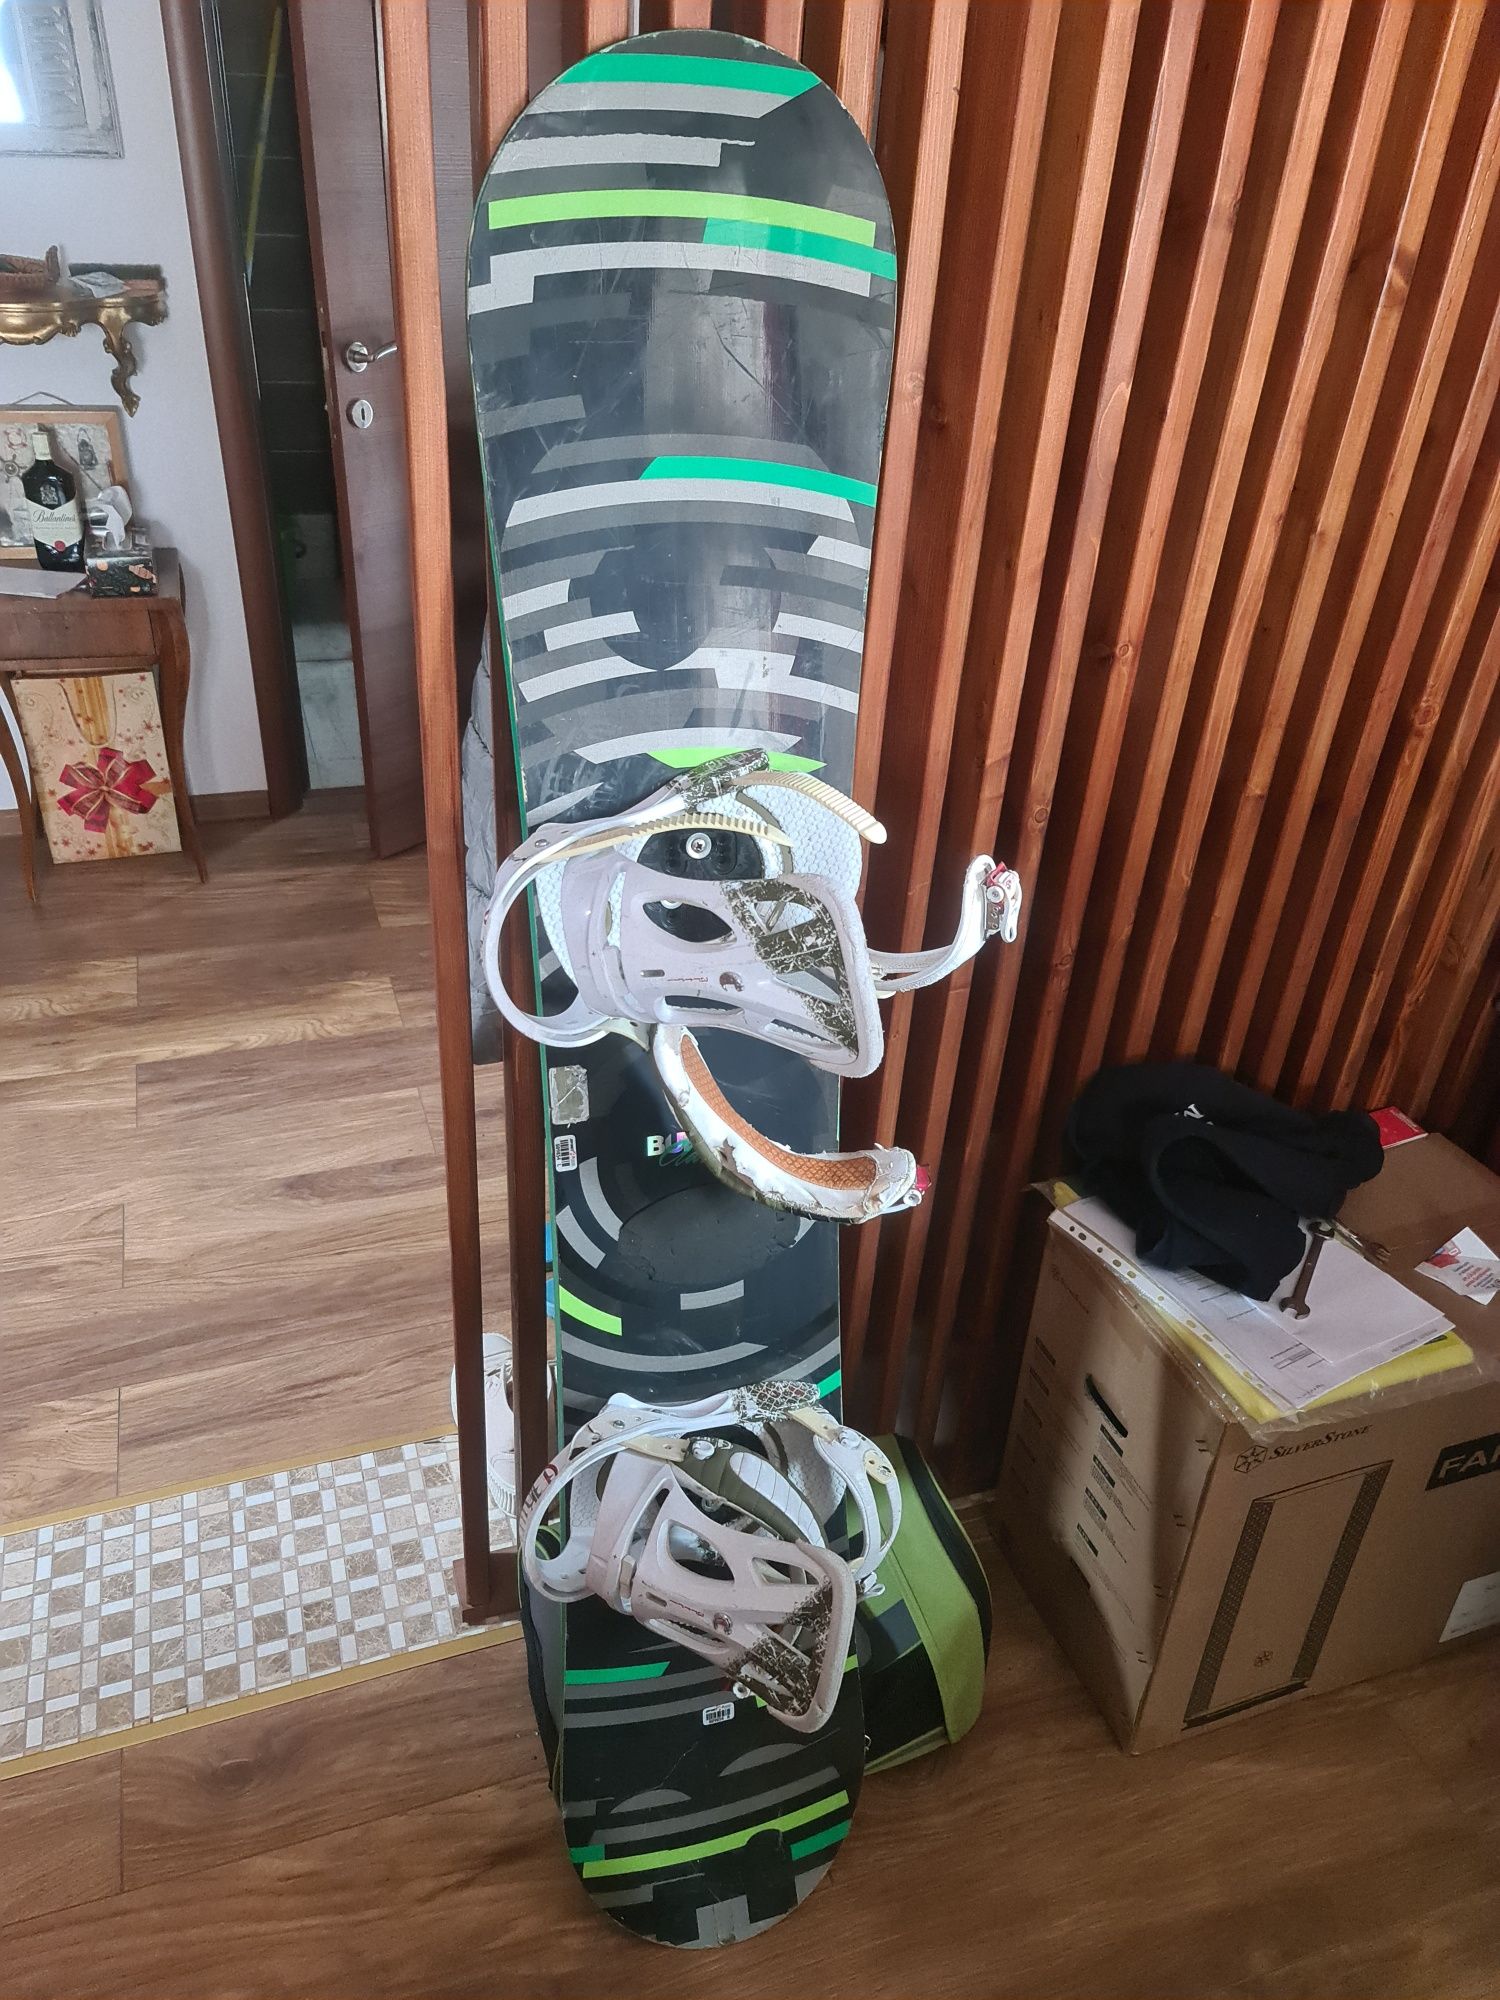 Burton Clash 55 (155cm) Snowboard